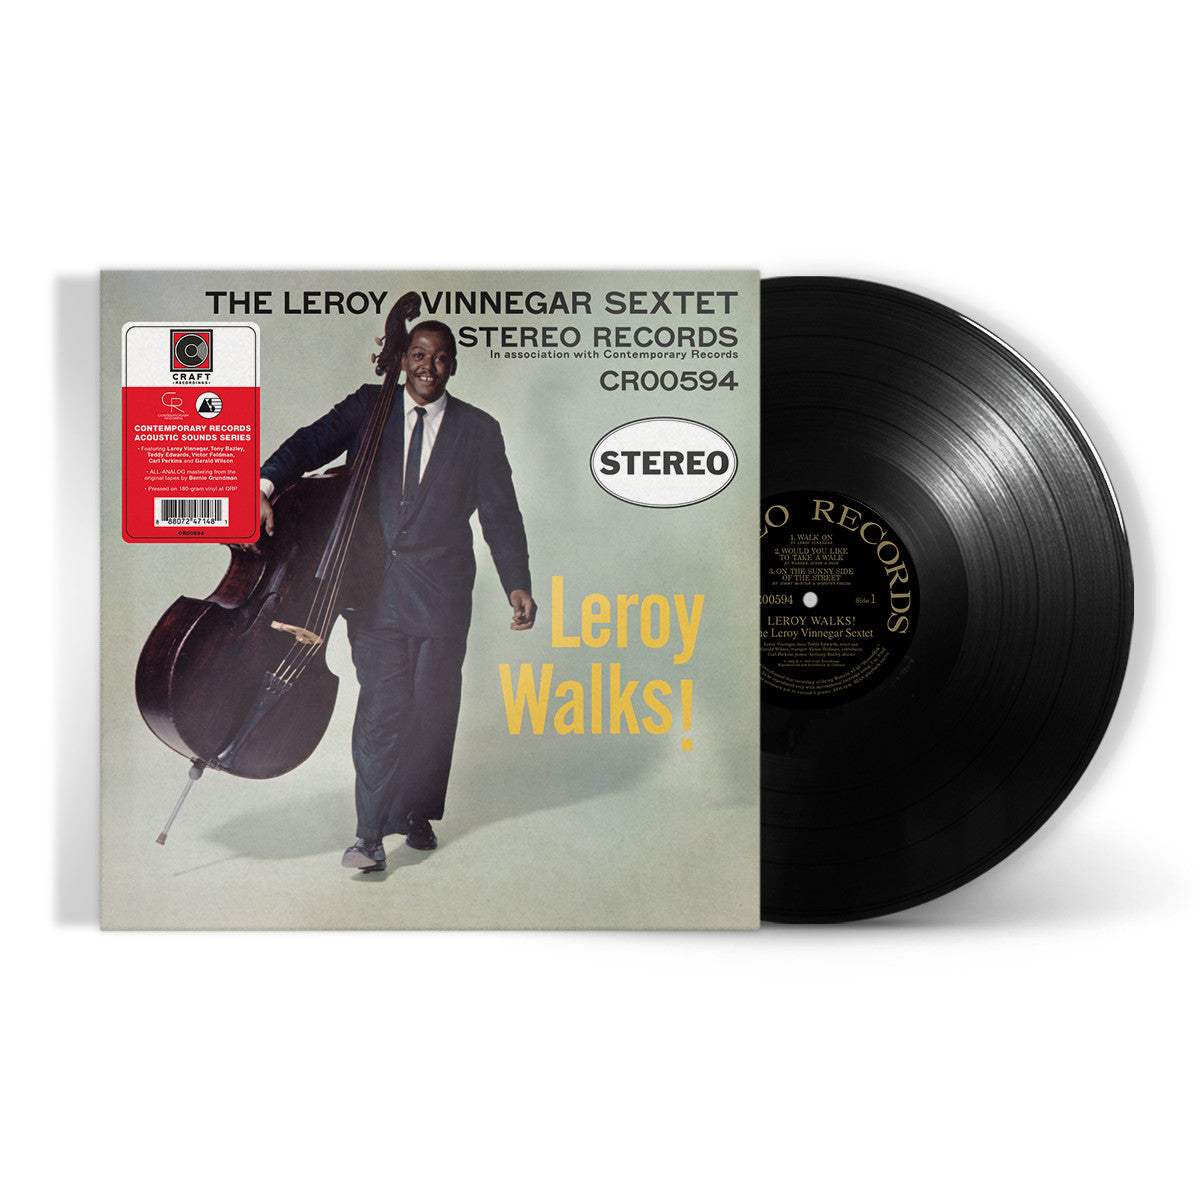 Leroy Vinnegar- Leroy Walks! (Contemporary Records Acoustic Sounds Series) (PREORDER) - Darkside Records